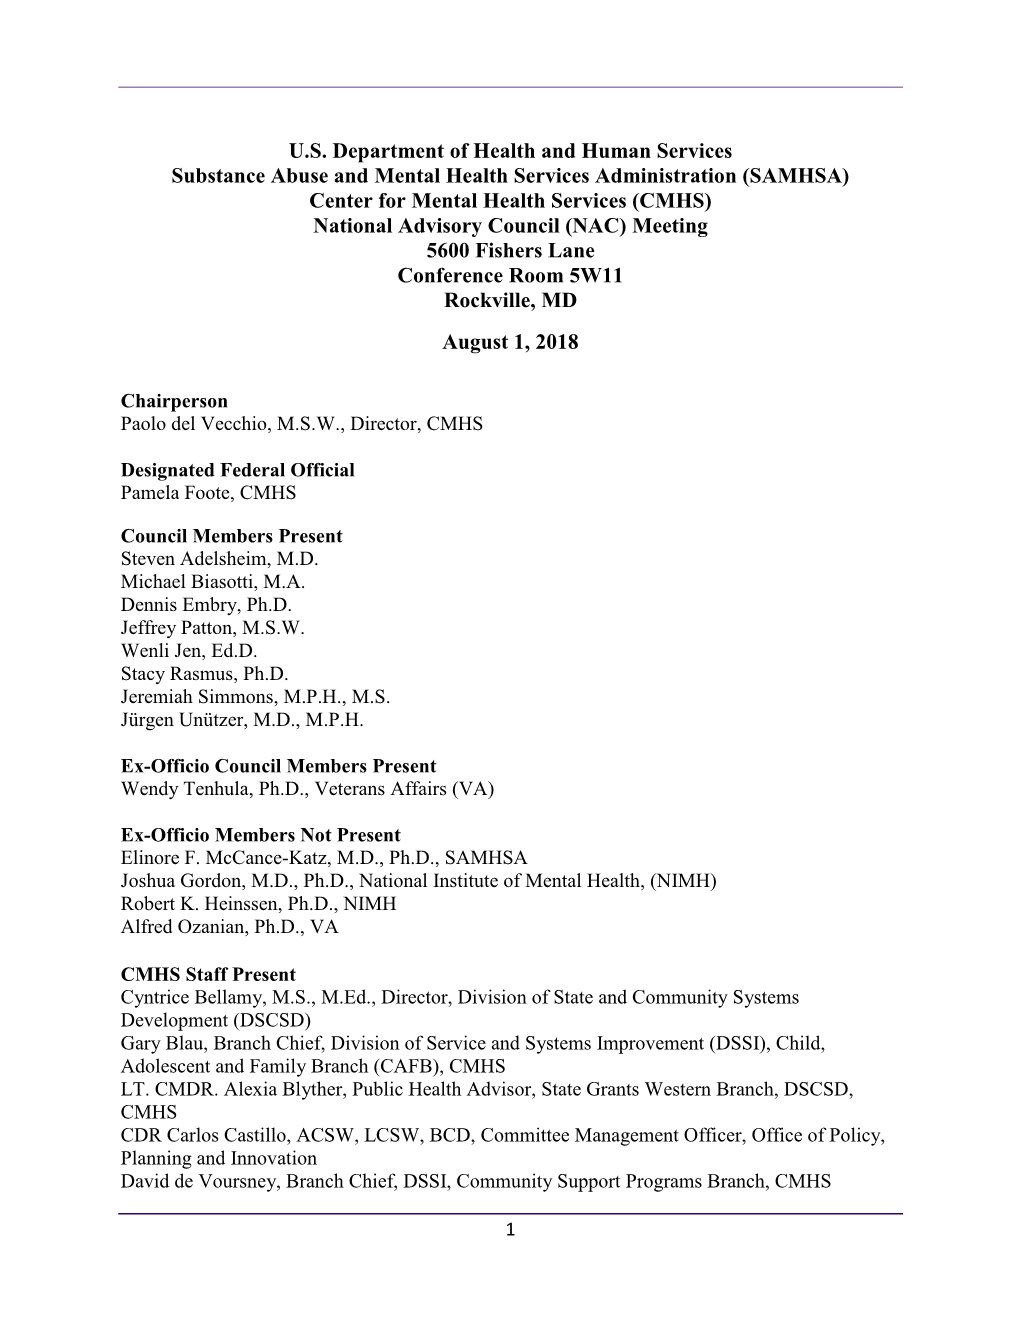 SAMHSA CMHS NAC August 1, 2018 Meeting Minutes